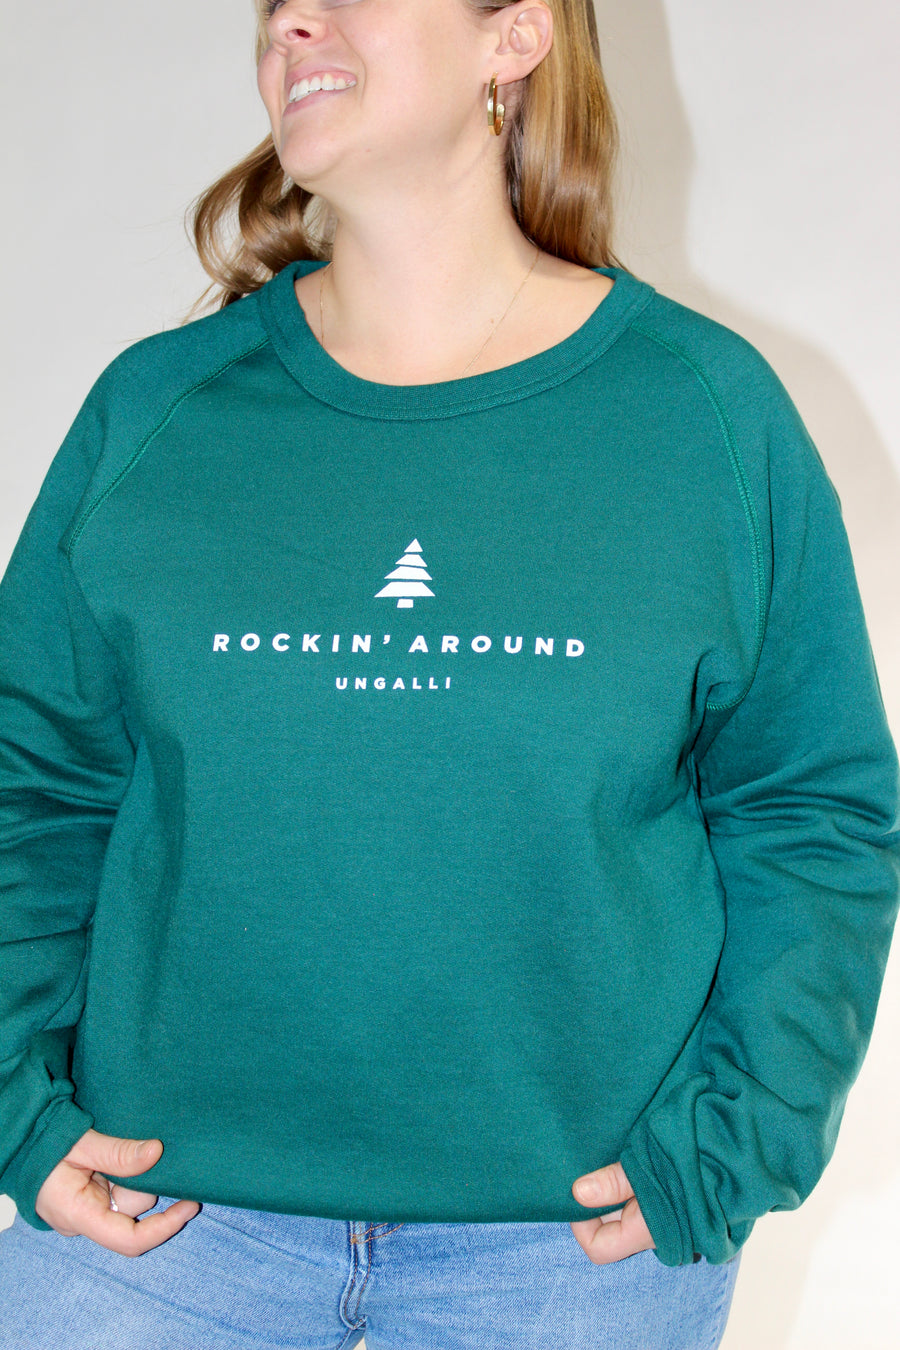 Rockin' Around Crew Sweater